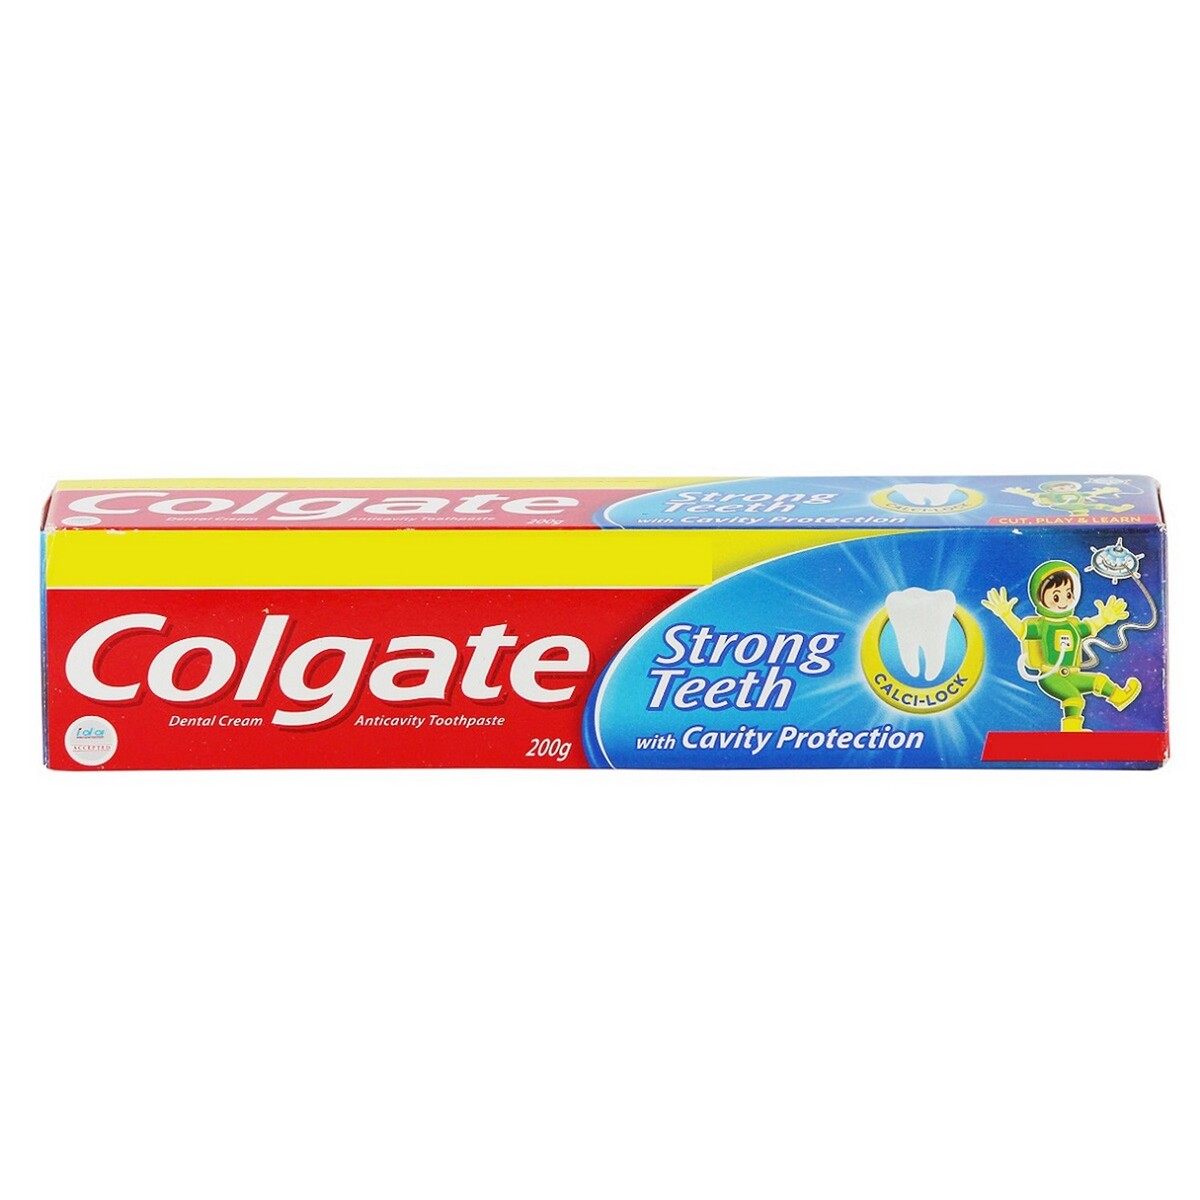 Colgate Tooth Paste Dental Cream 200g